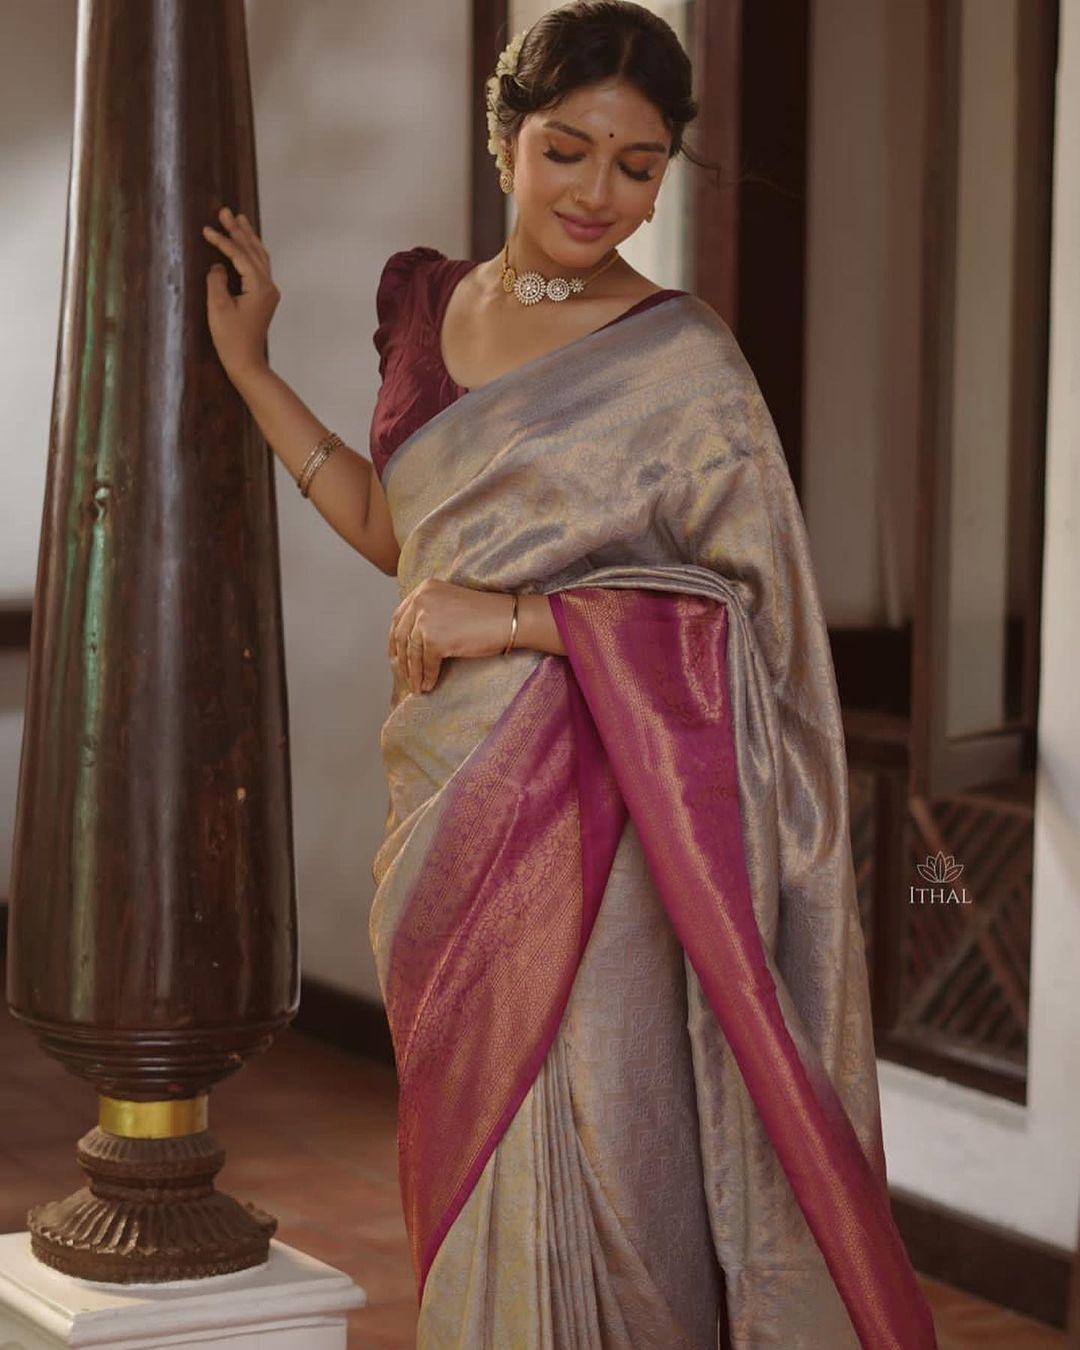 Portrait poses for women saree Stock Photos - Page 1 : Masterfile